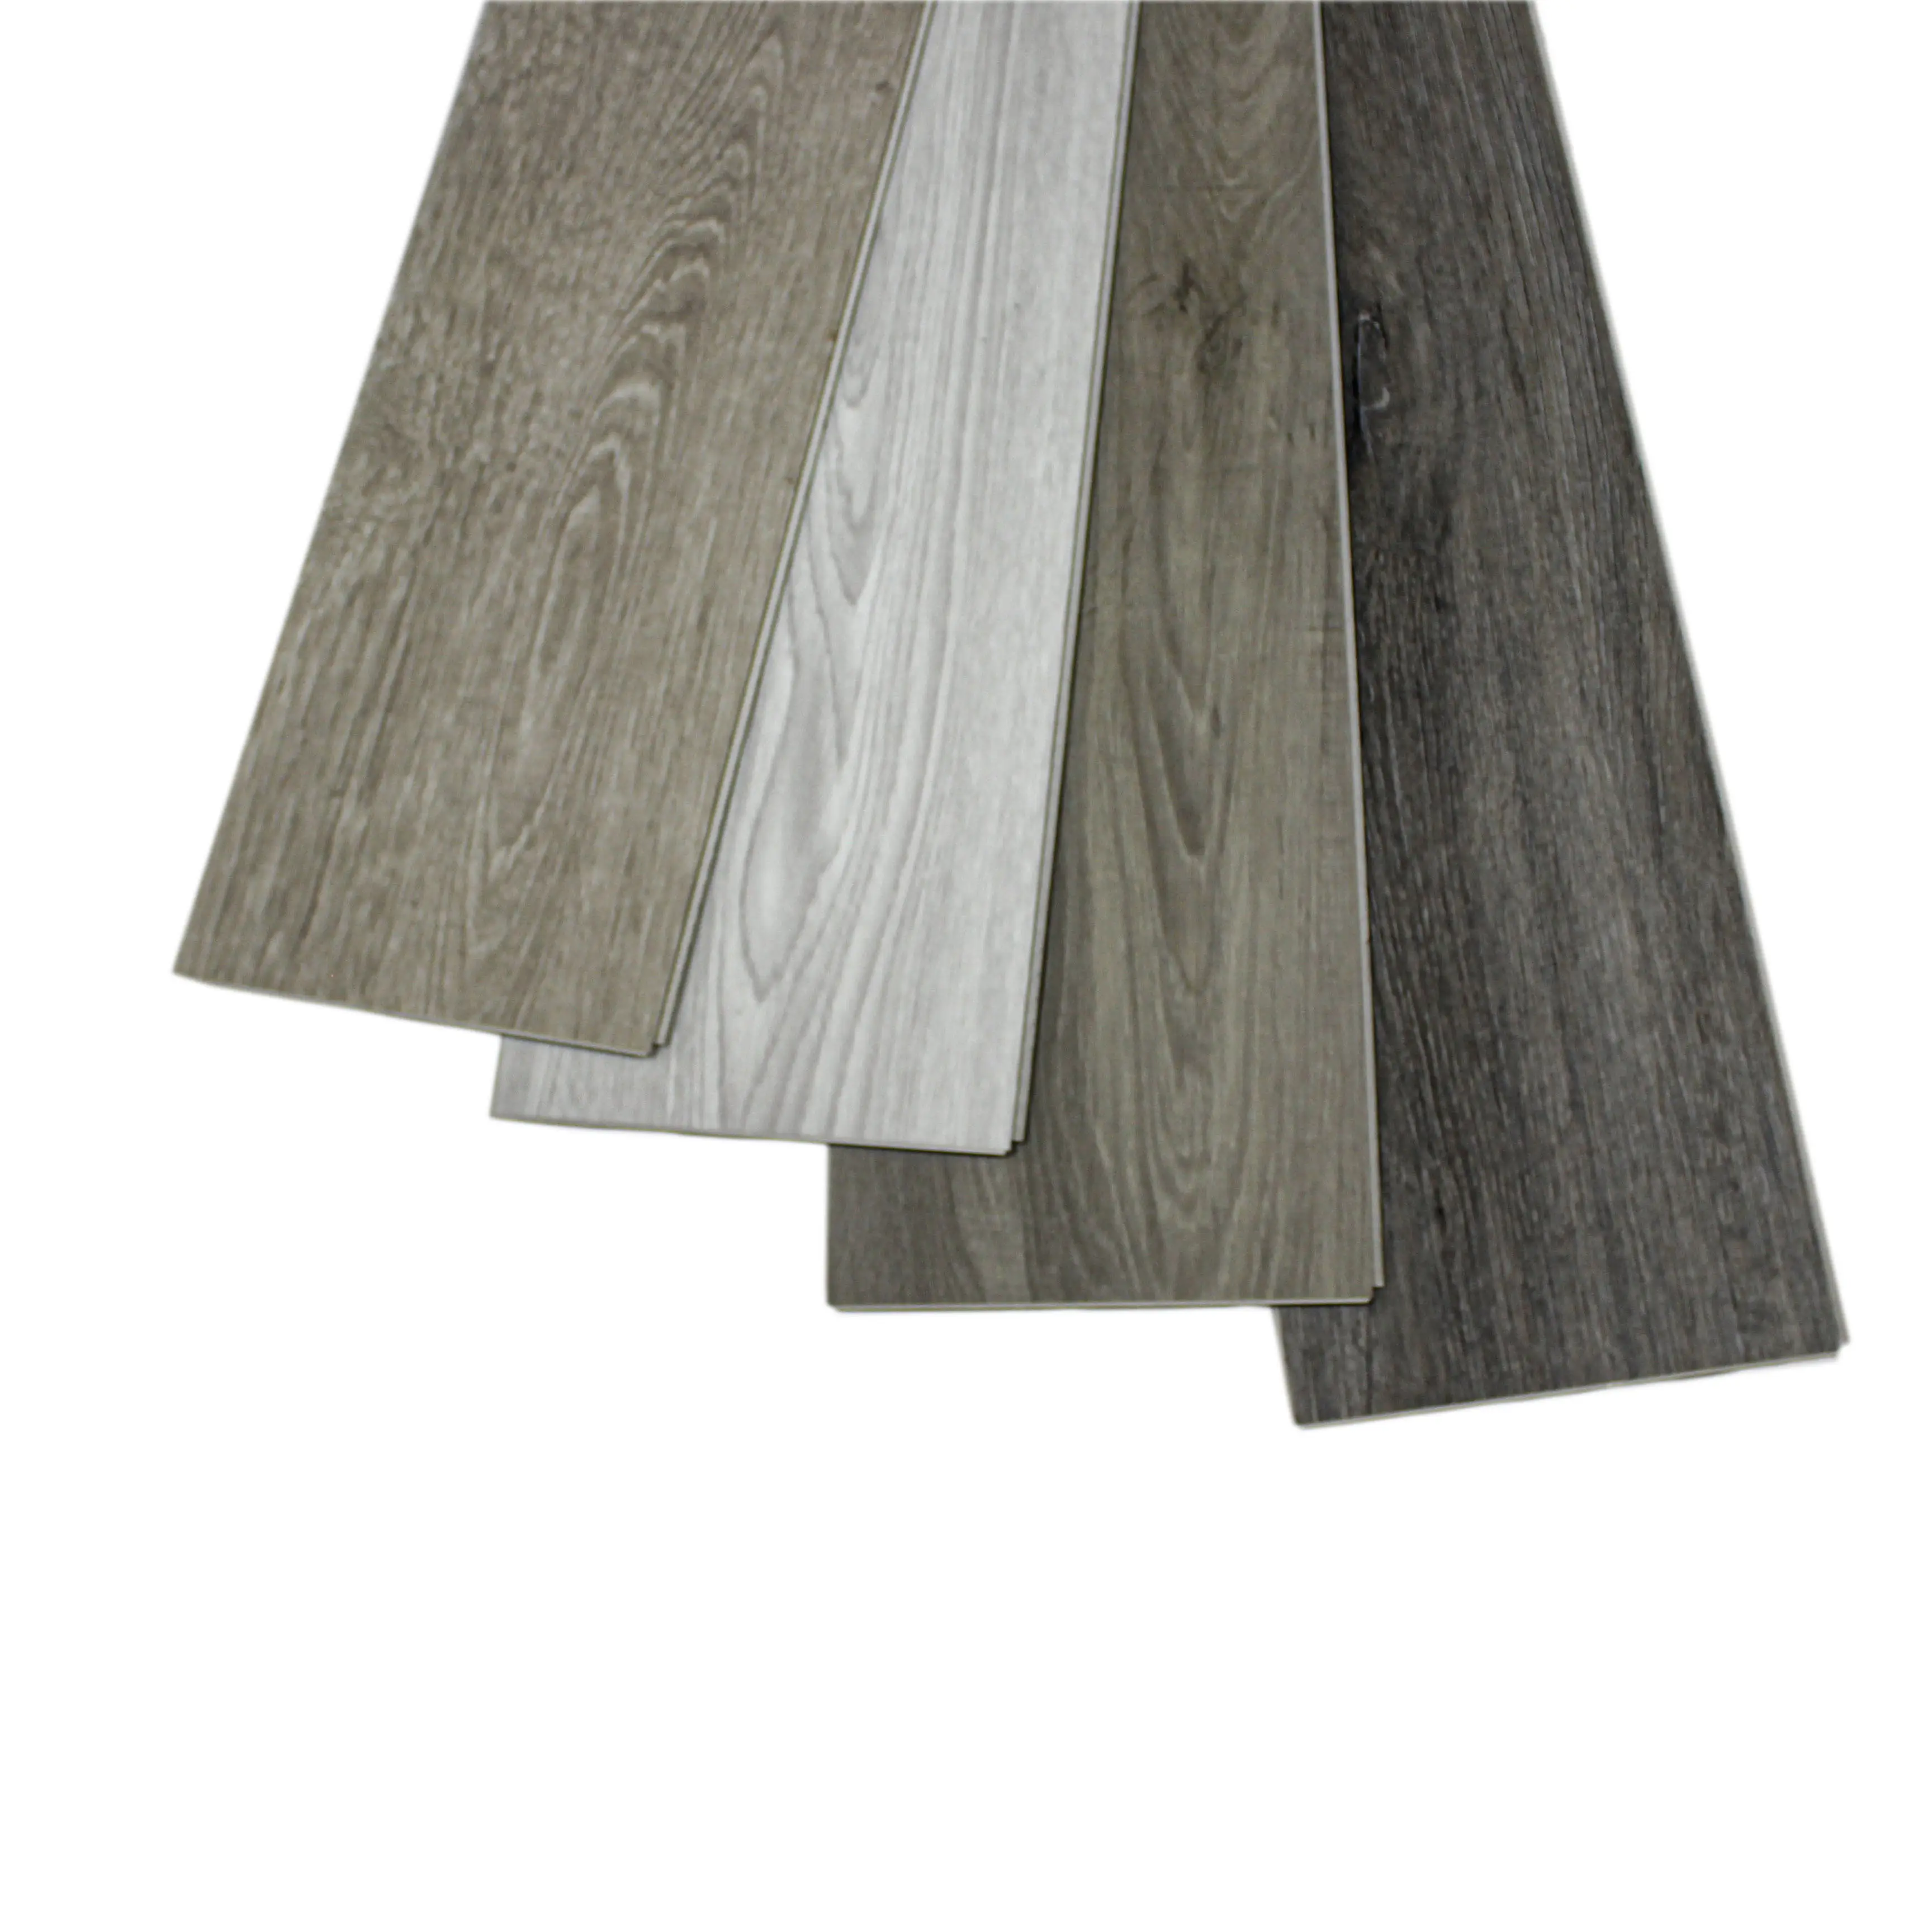 wear resistant virgin material plastic pvc flooring luxury vinyl plank floor click lock spc vinyl flooring for indoor